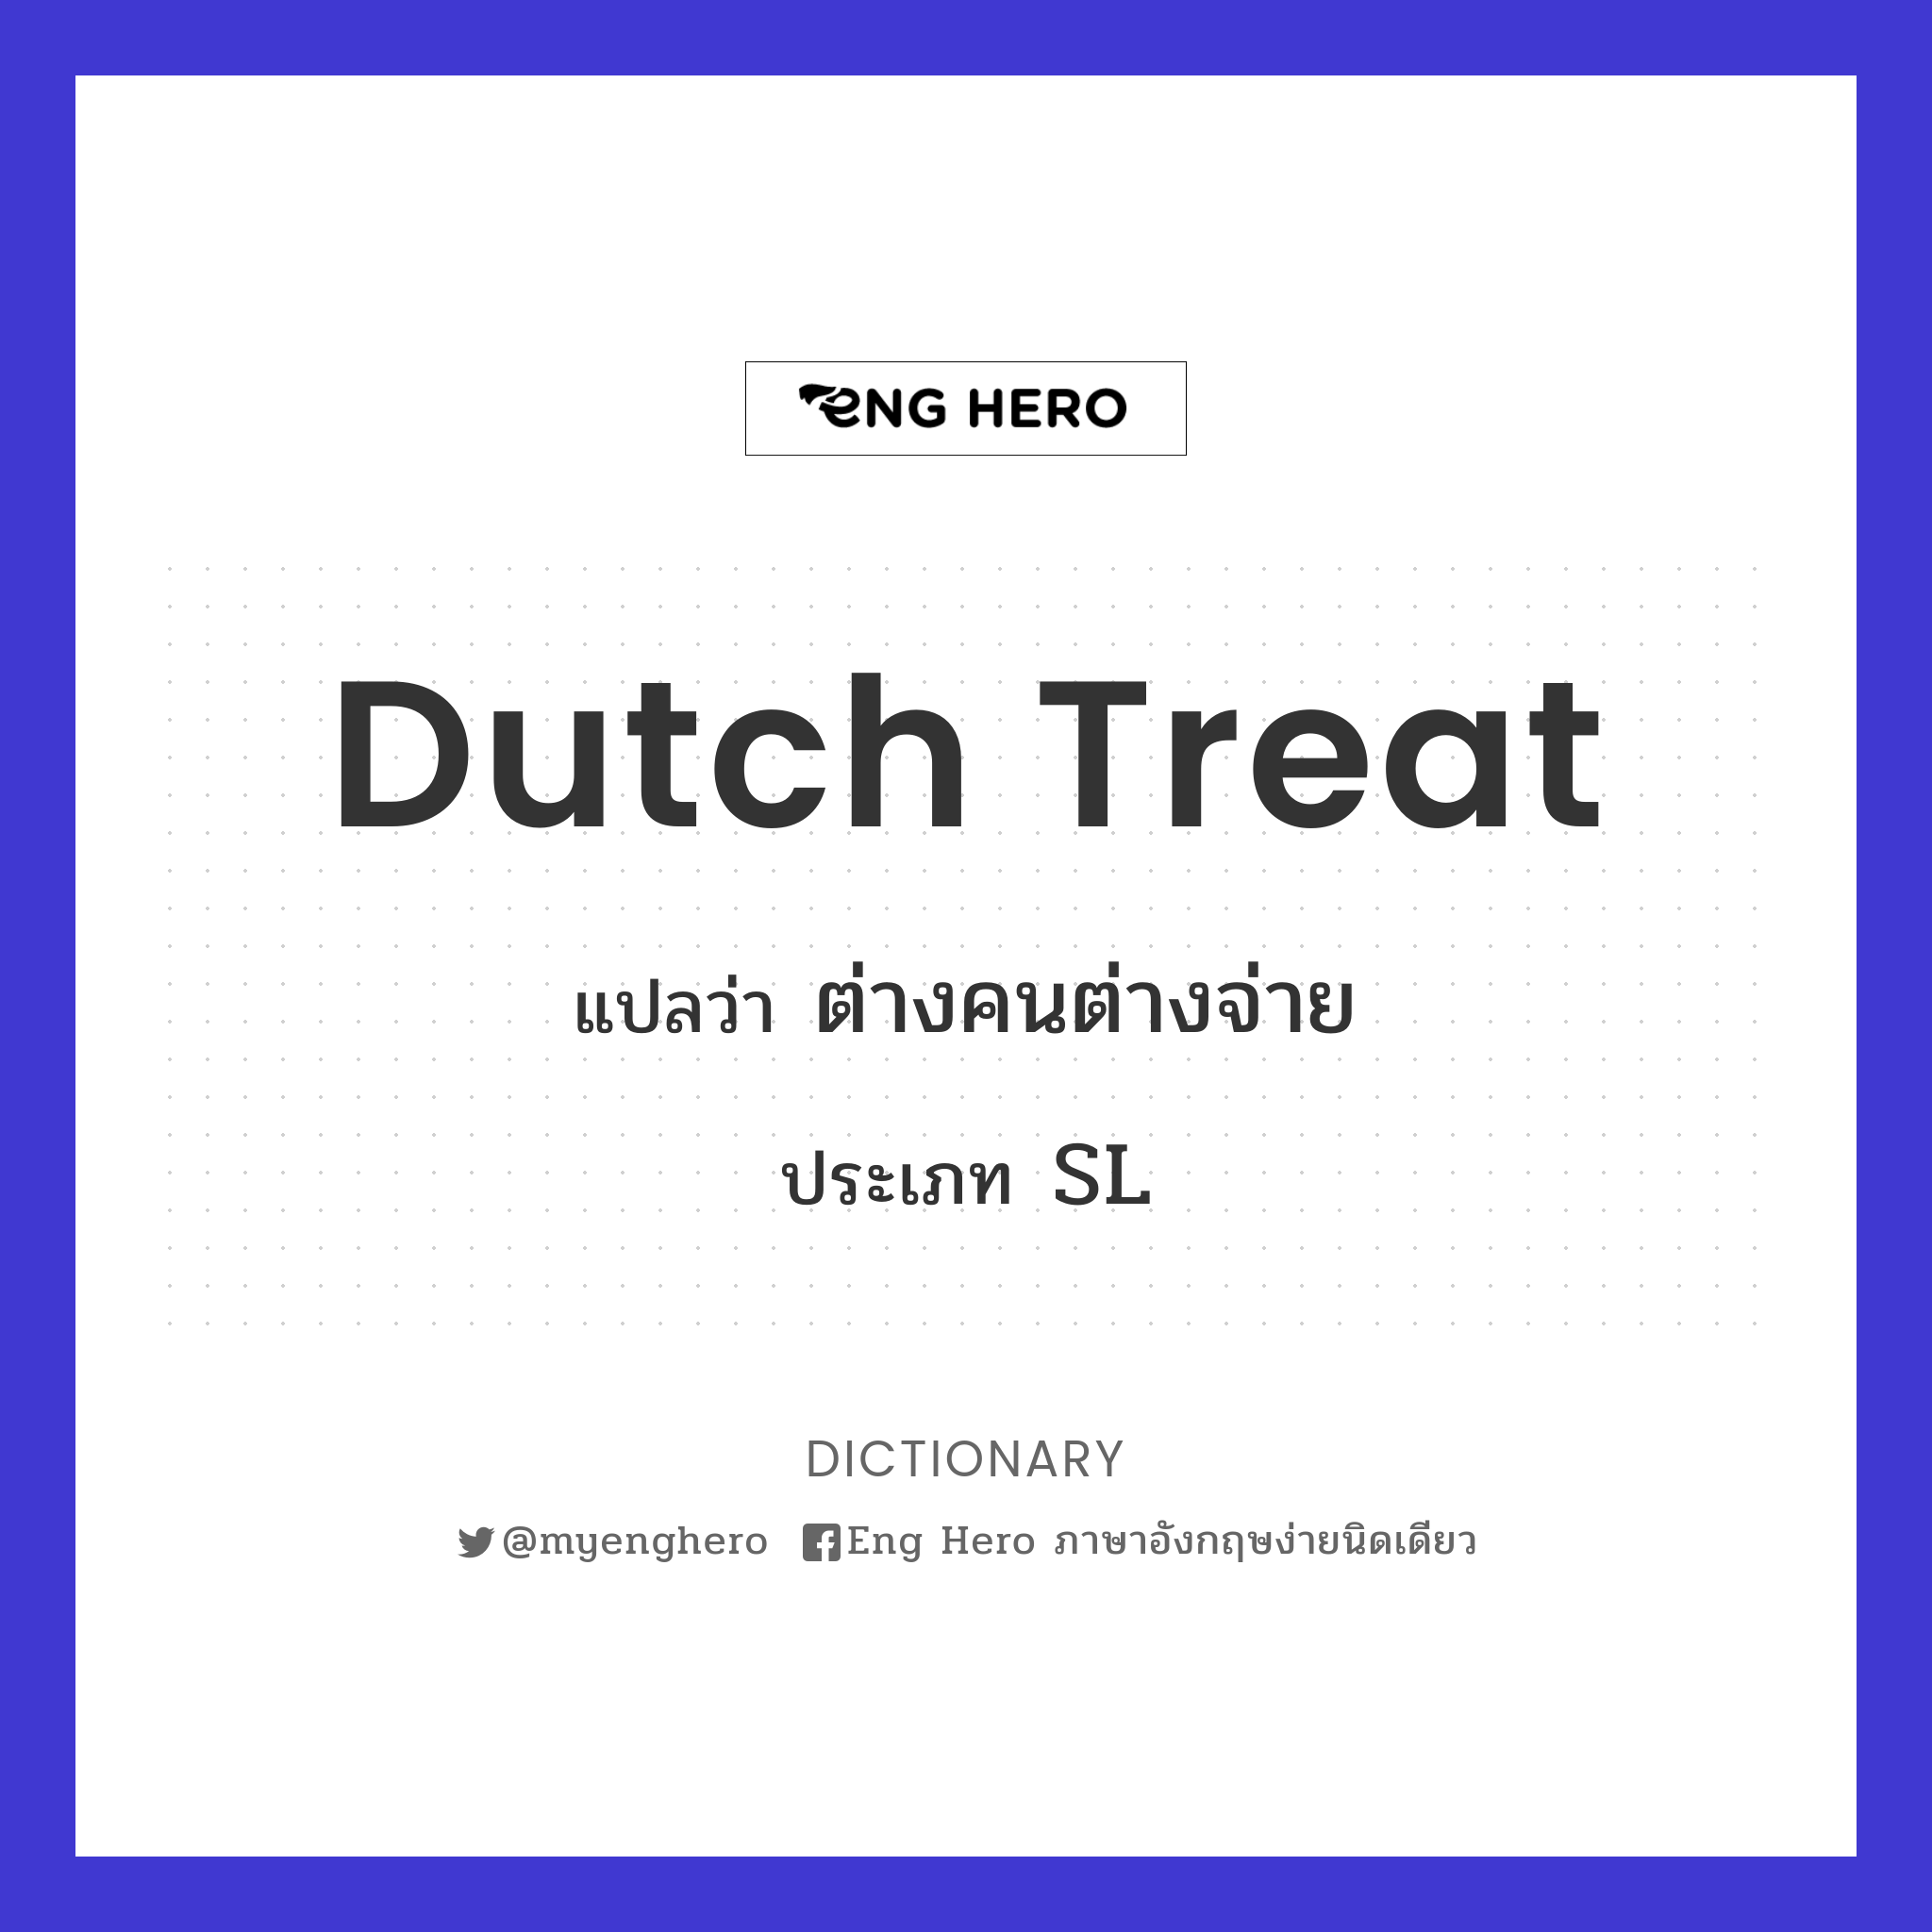 Dutch treat